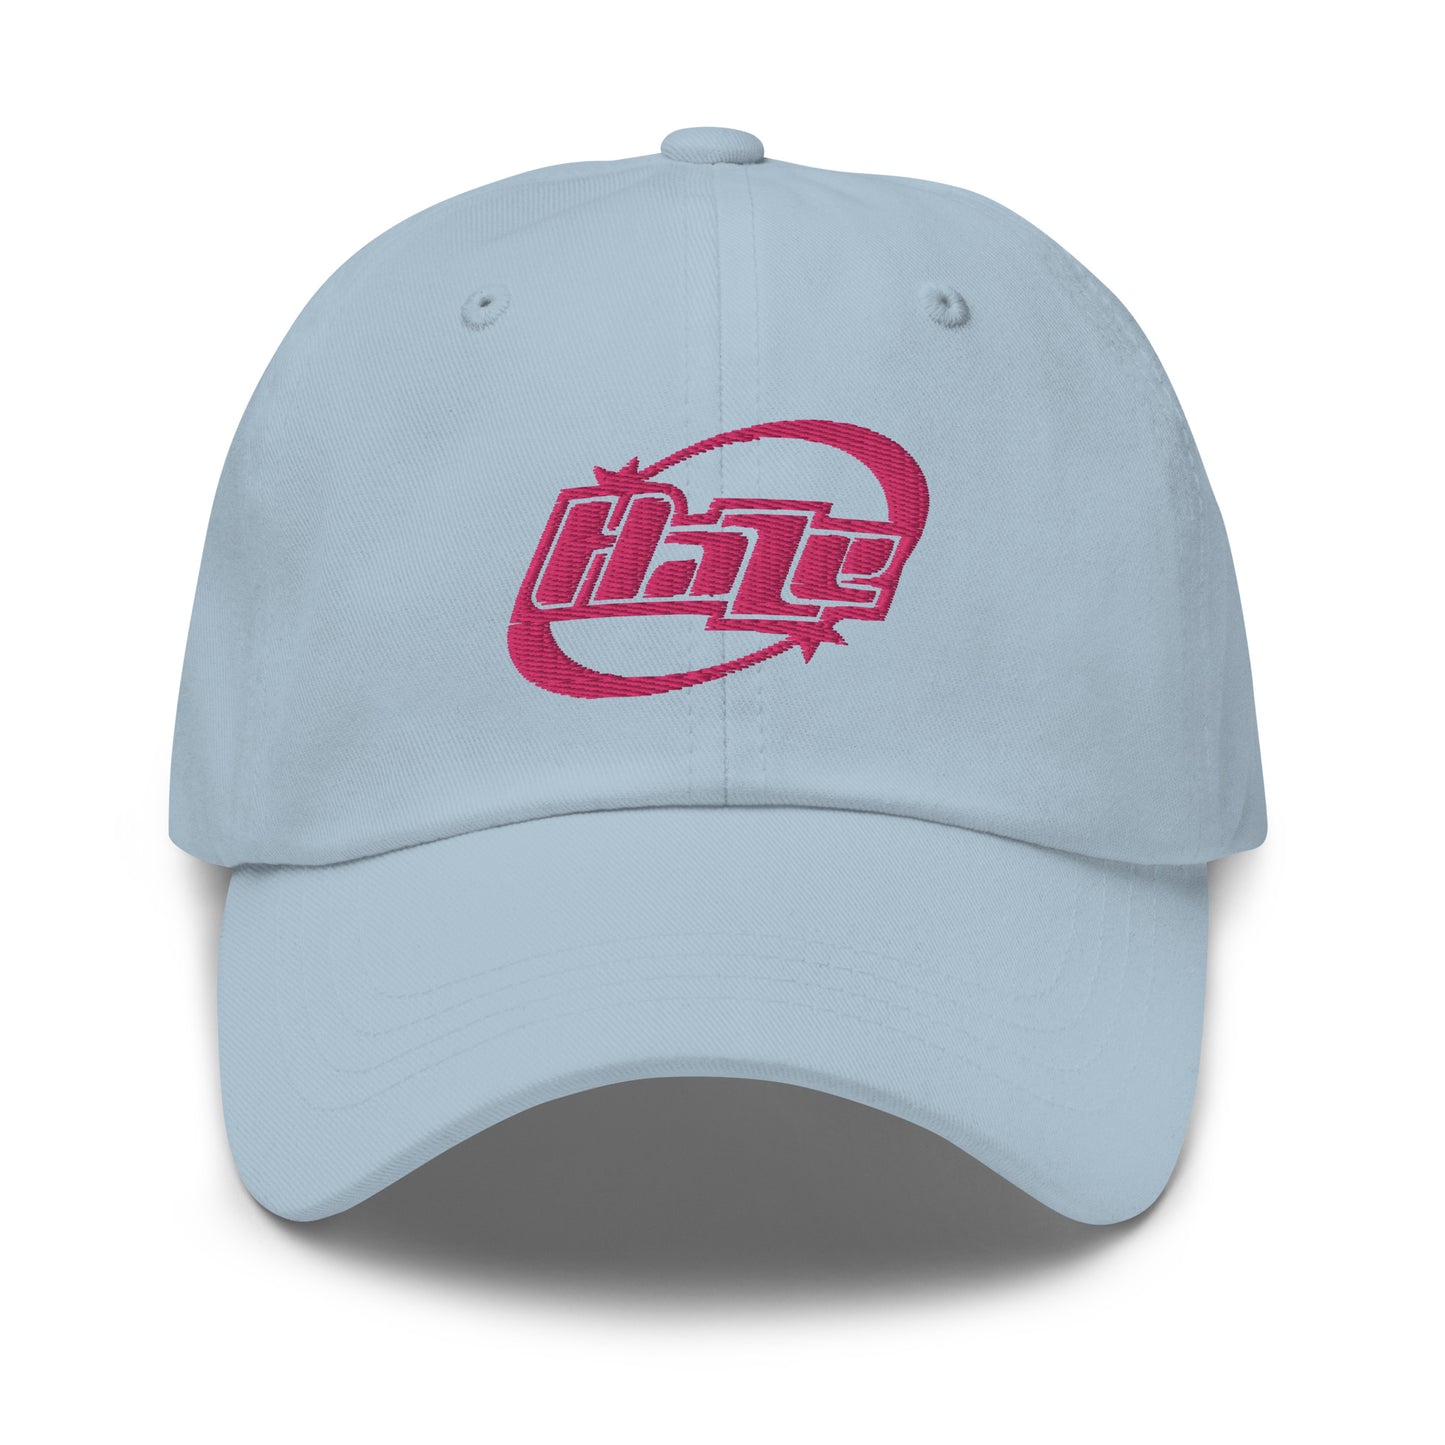 Pink "Big Haze" Hat